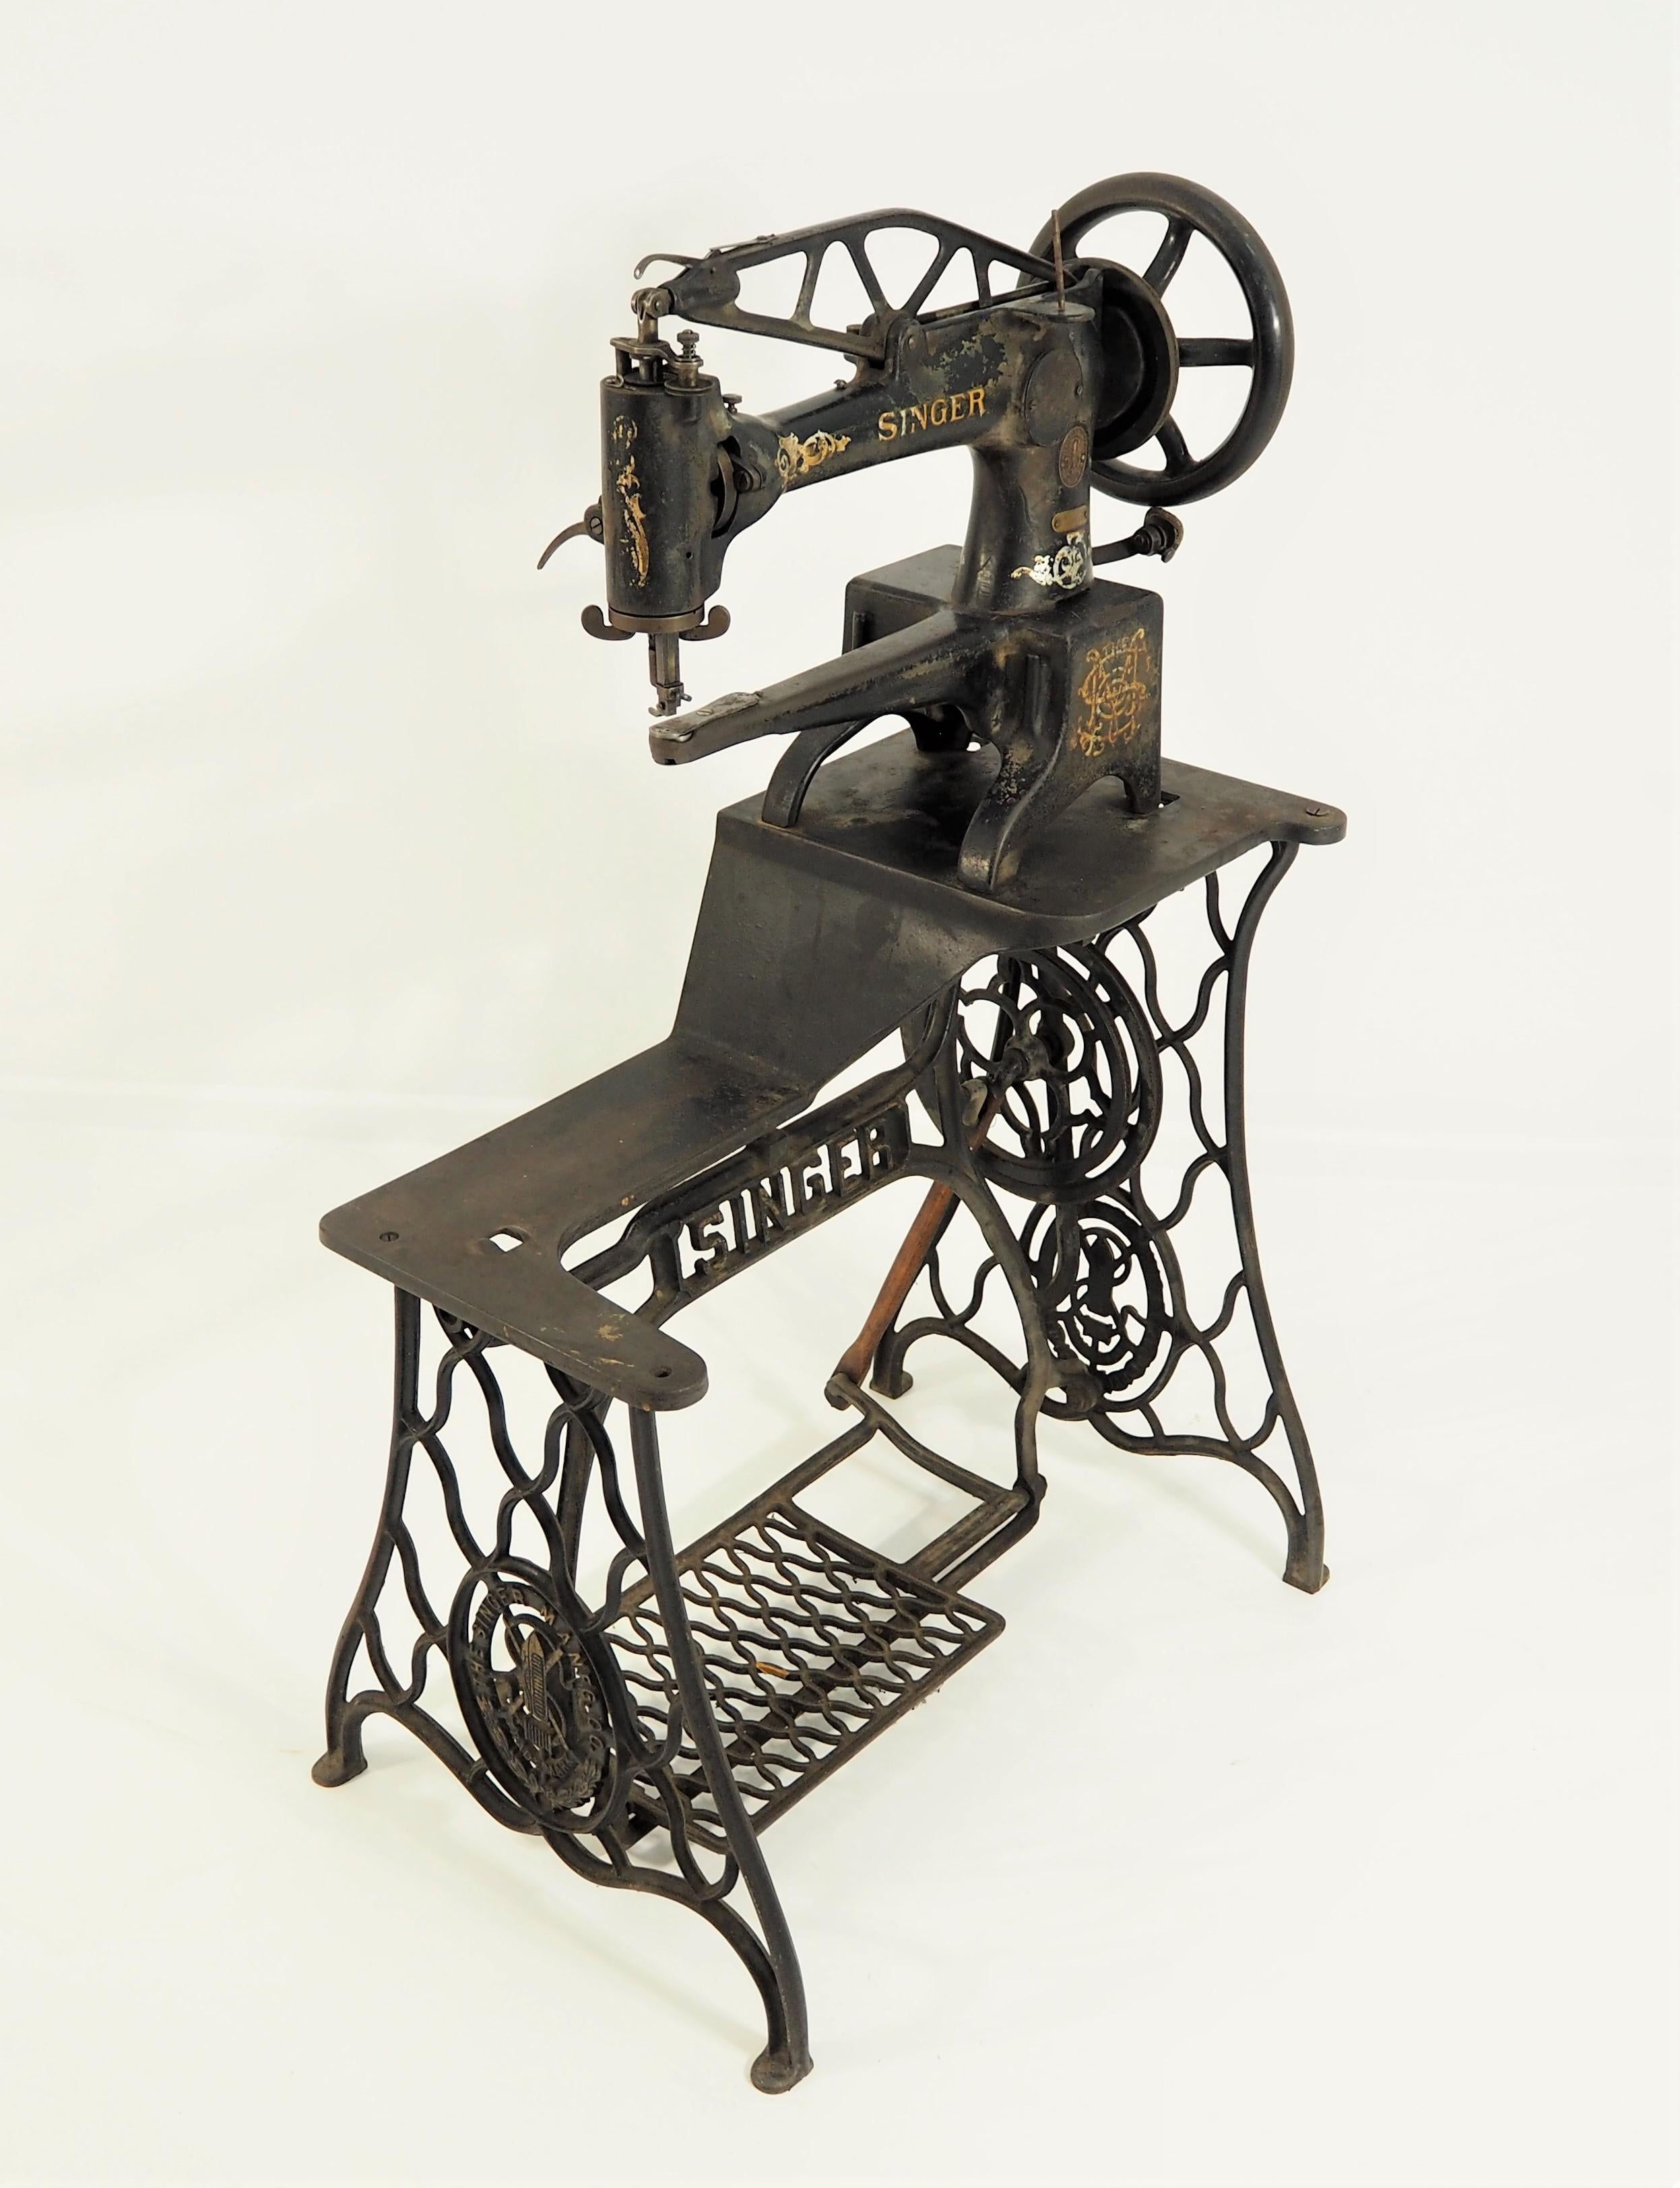 Sewing Machine from Singer, circa 1920s In Fair Condition In Bielsko Biala, slaskie